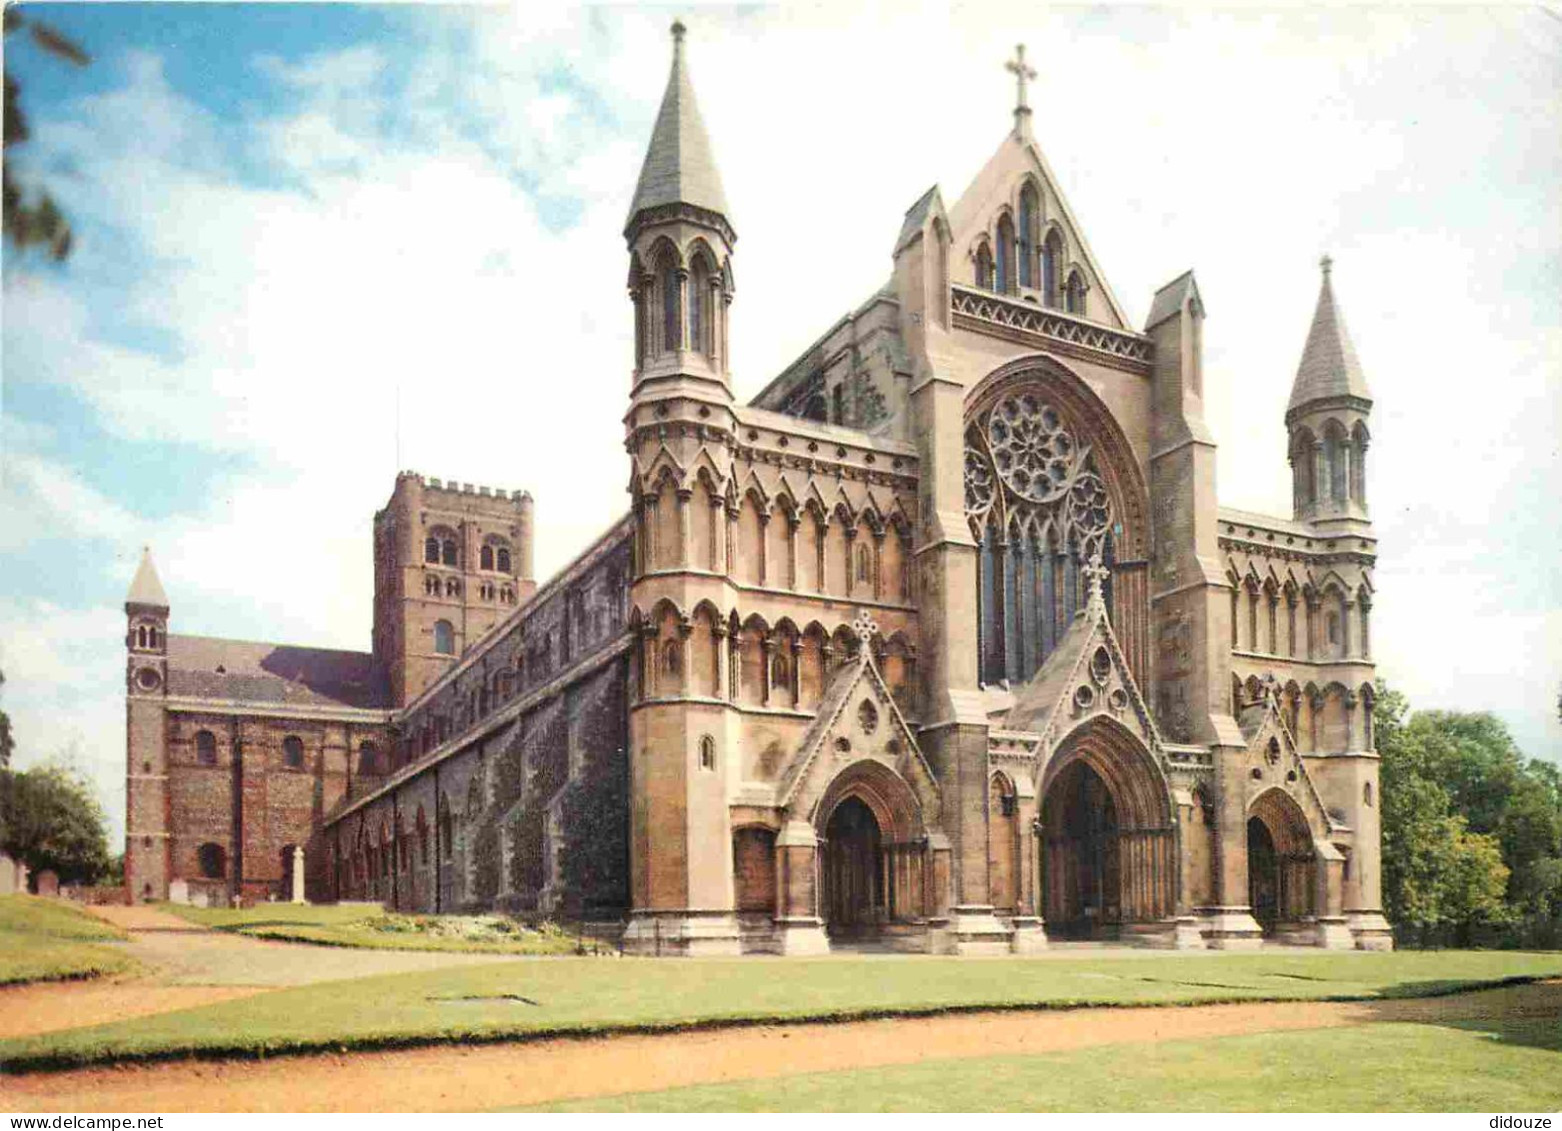 Angleterre - St Alban Abbey From The North West - Hertfordshire - England - Royaume Uni - UK - United Kingdom - CPM - Ca - Hertfordshire